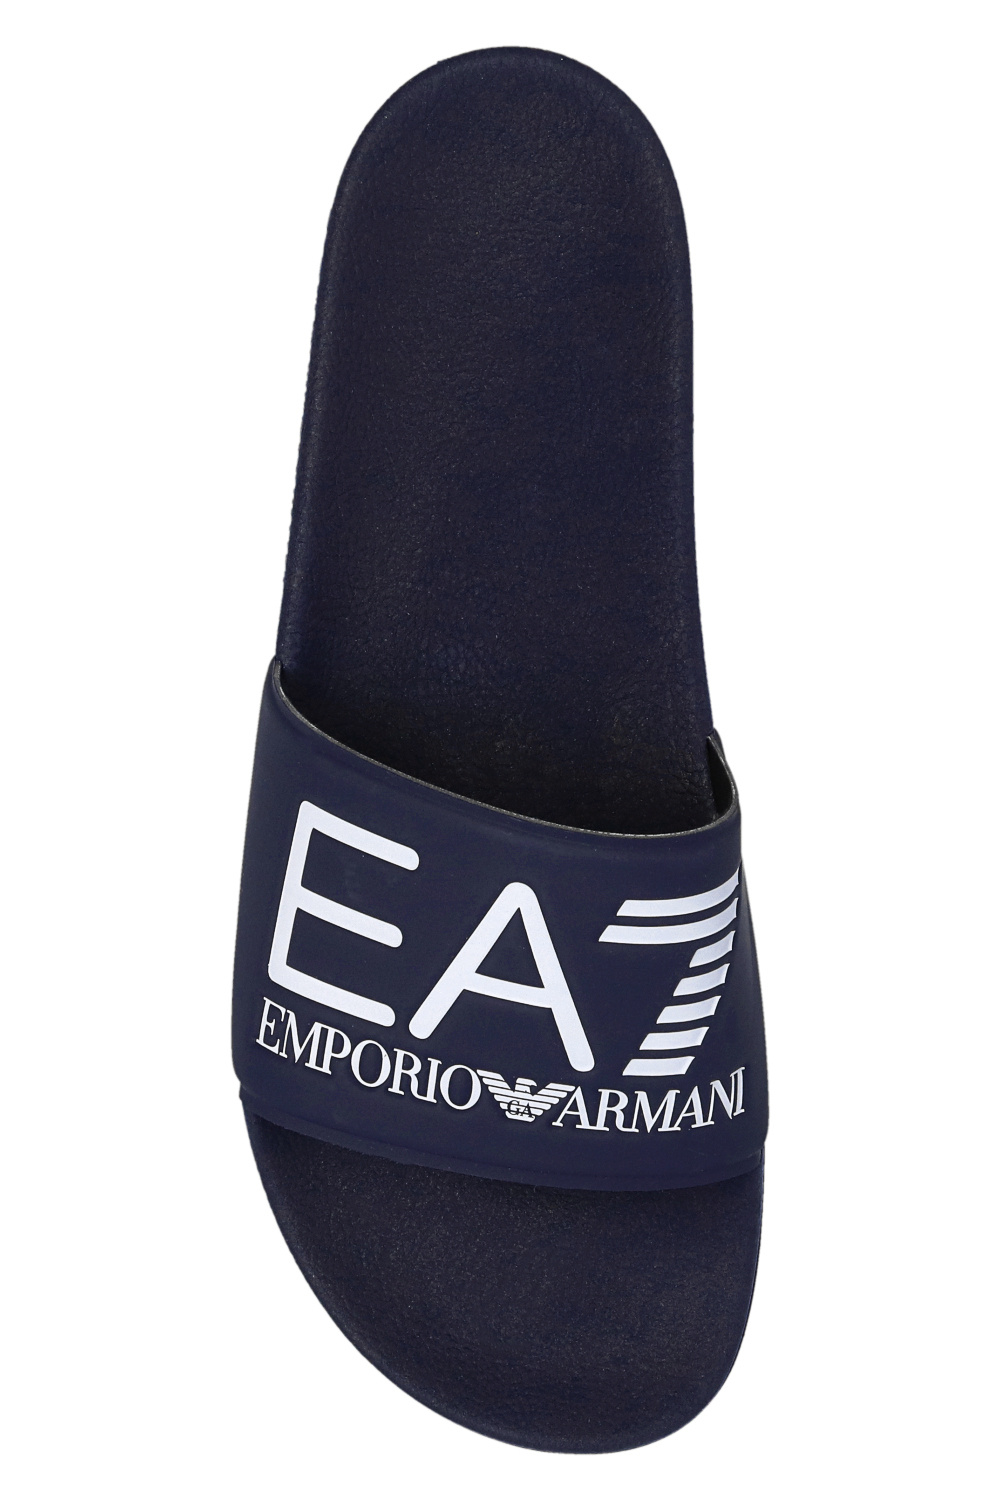 Slides with logo EA7 Emporio Armani - Vitkac Germany